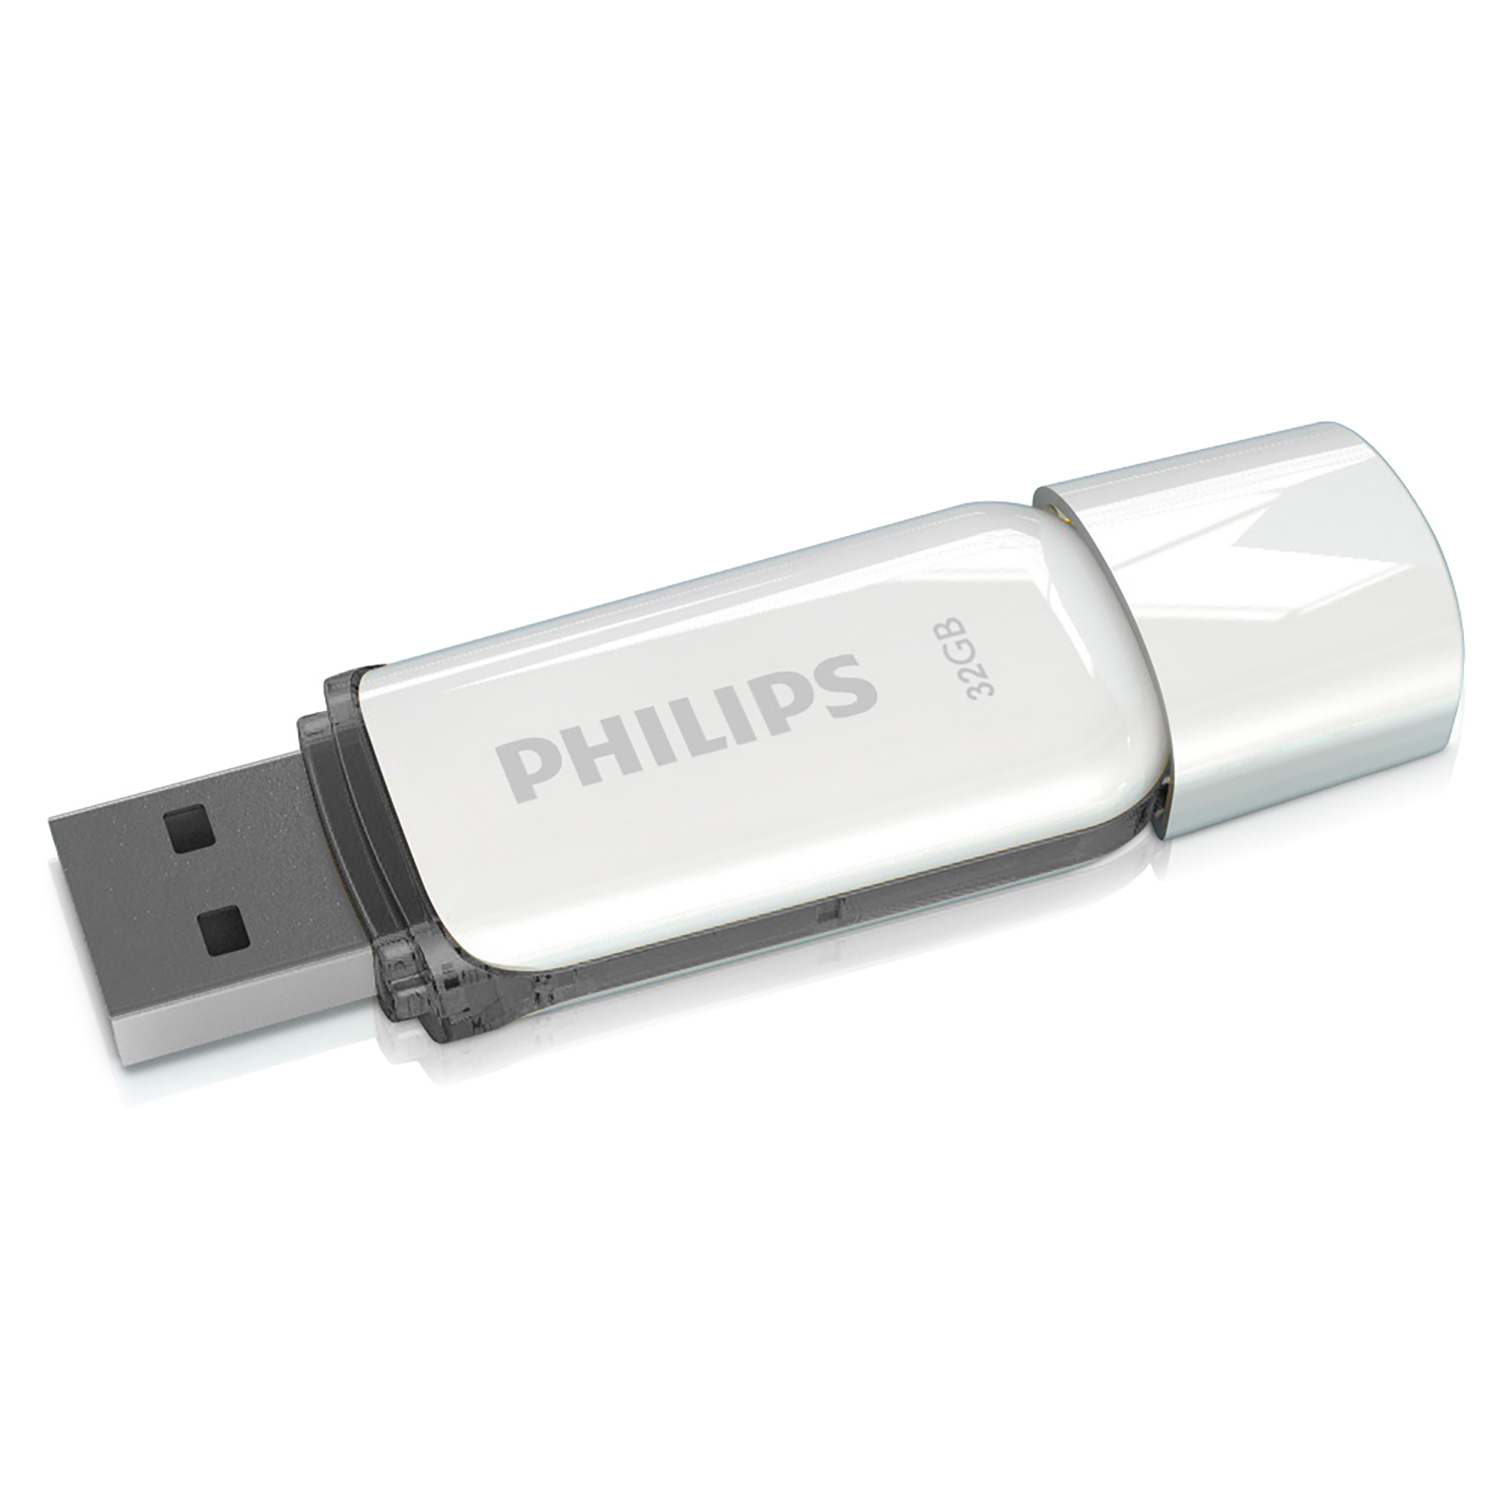 Philips USB 2.0 Flash Drive - Snow Series - 32GB